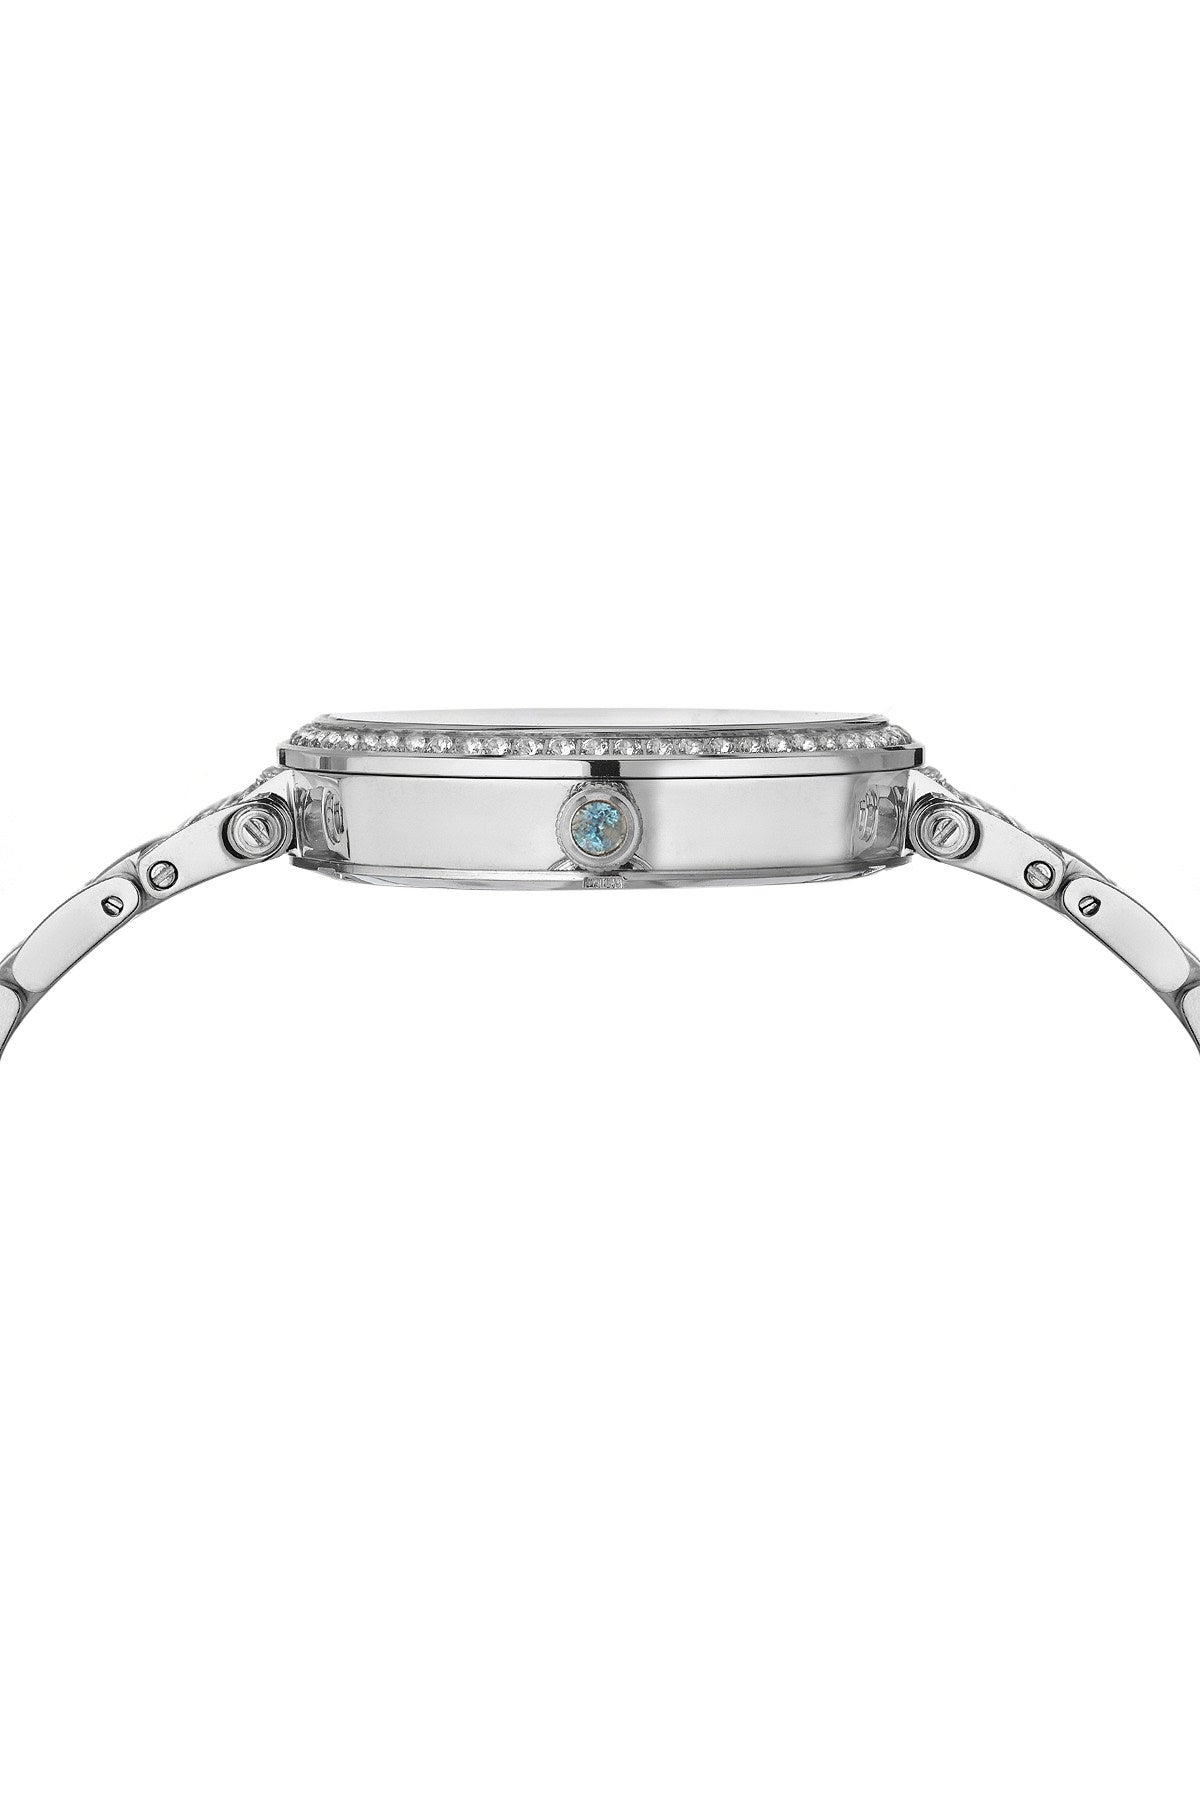 Porsamo Bleu Chantal Luxury Topaz Women's Stainless Steel Watch, Silver, White 671ACHS